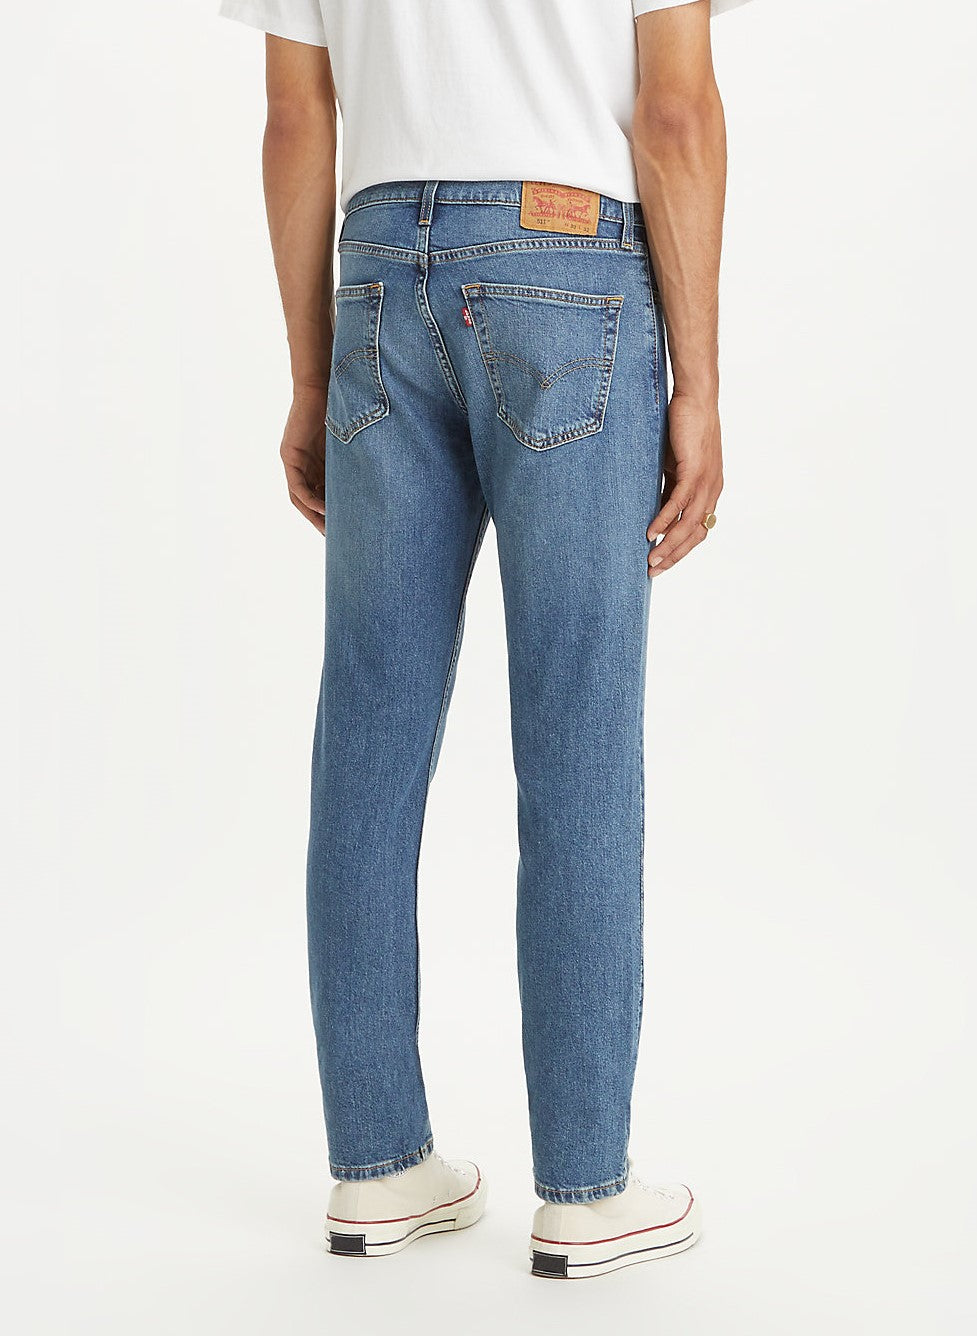 pantalones-jeans-levis-511-slim-p-caballeros-6